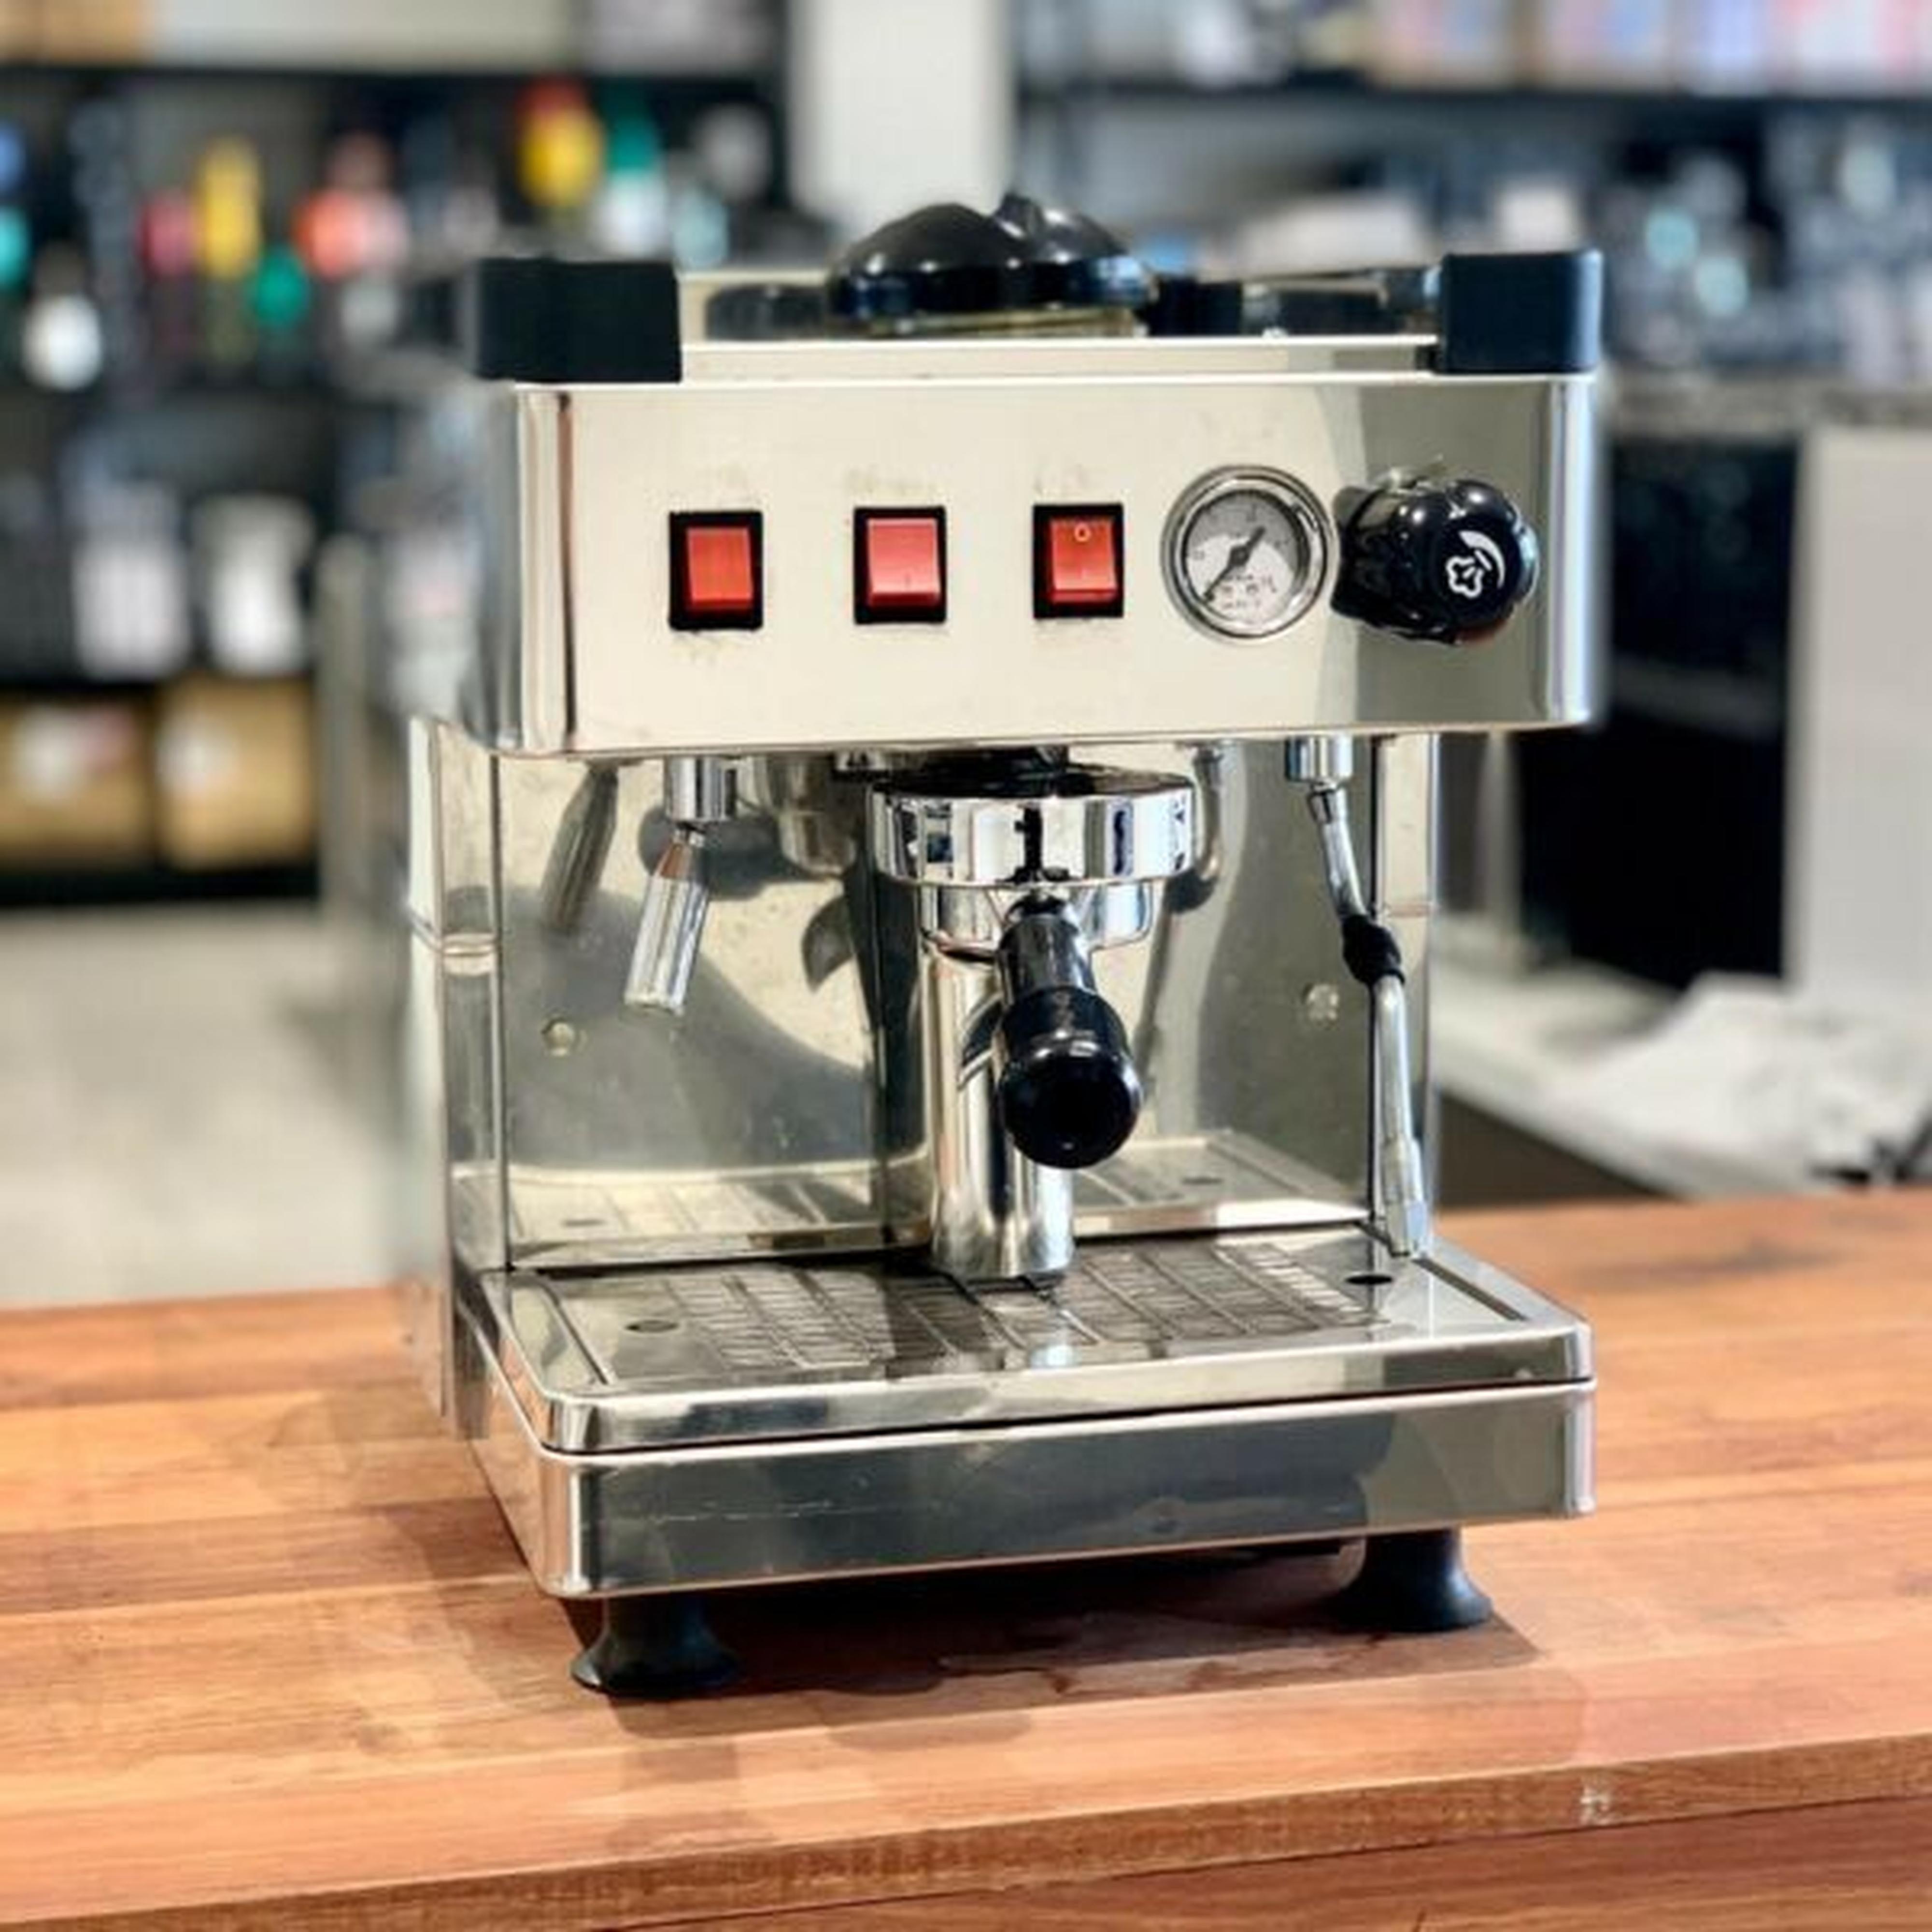 Cheap Semi Commercial One Group Wega Coffee Machine